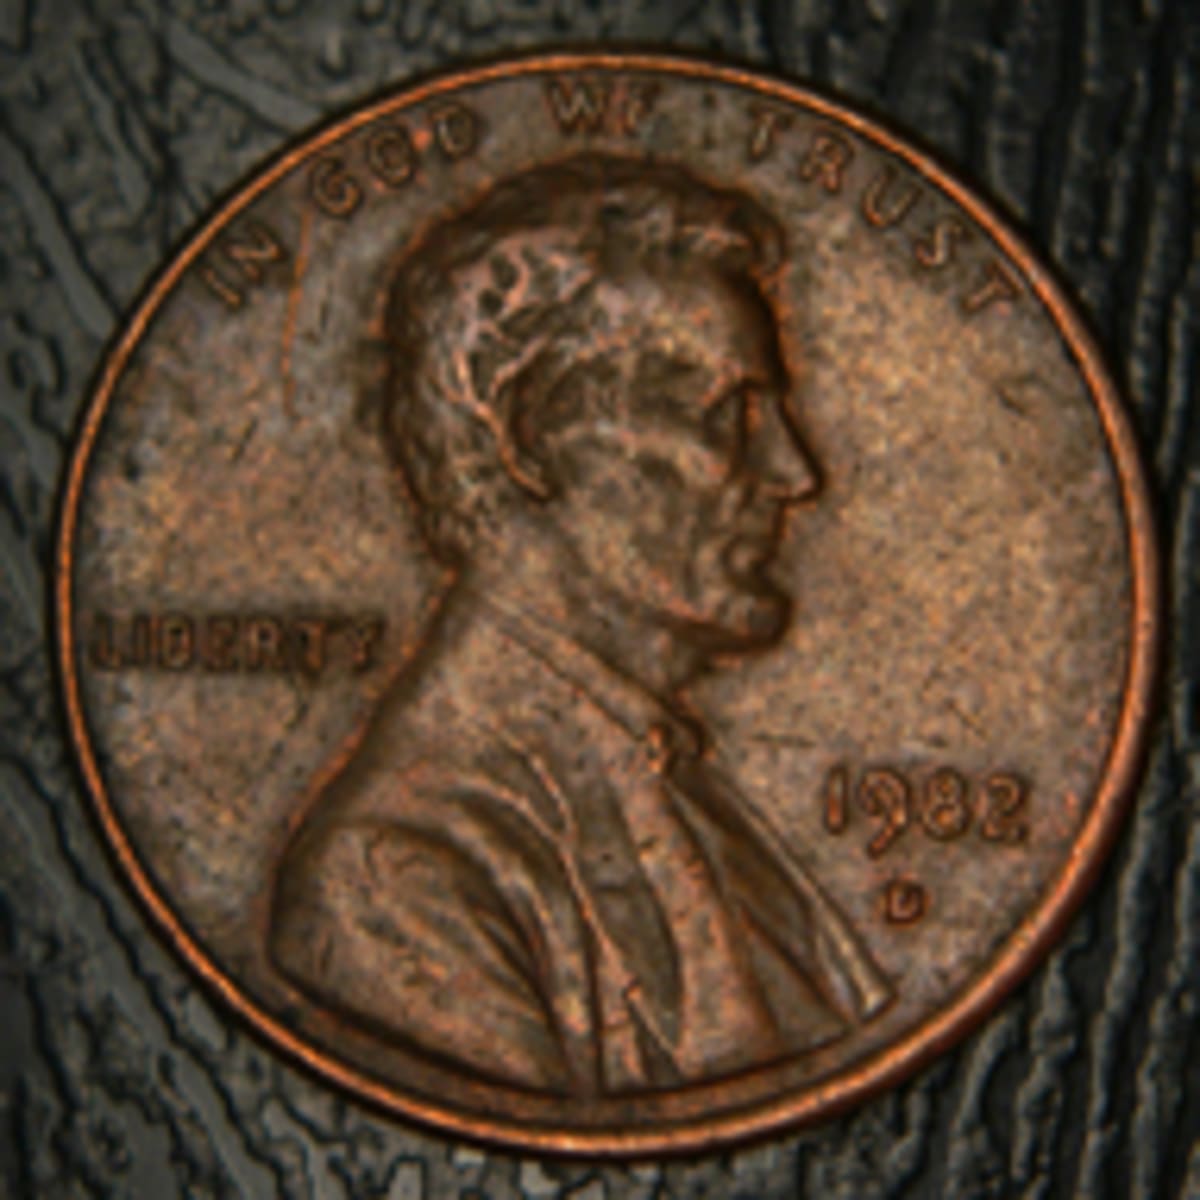 Rare 1982-D Small Date Copper Found - Numismatic News